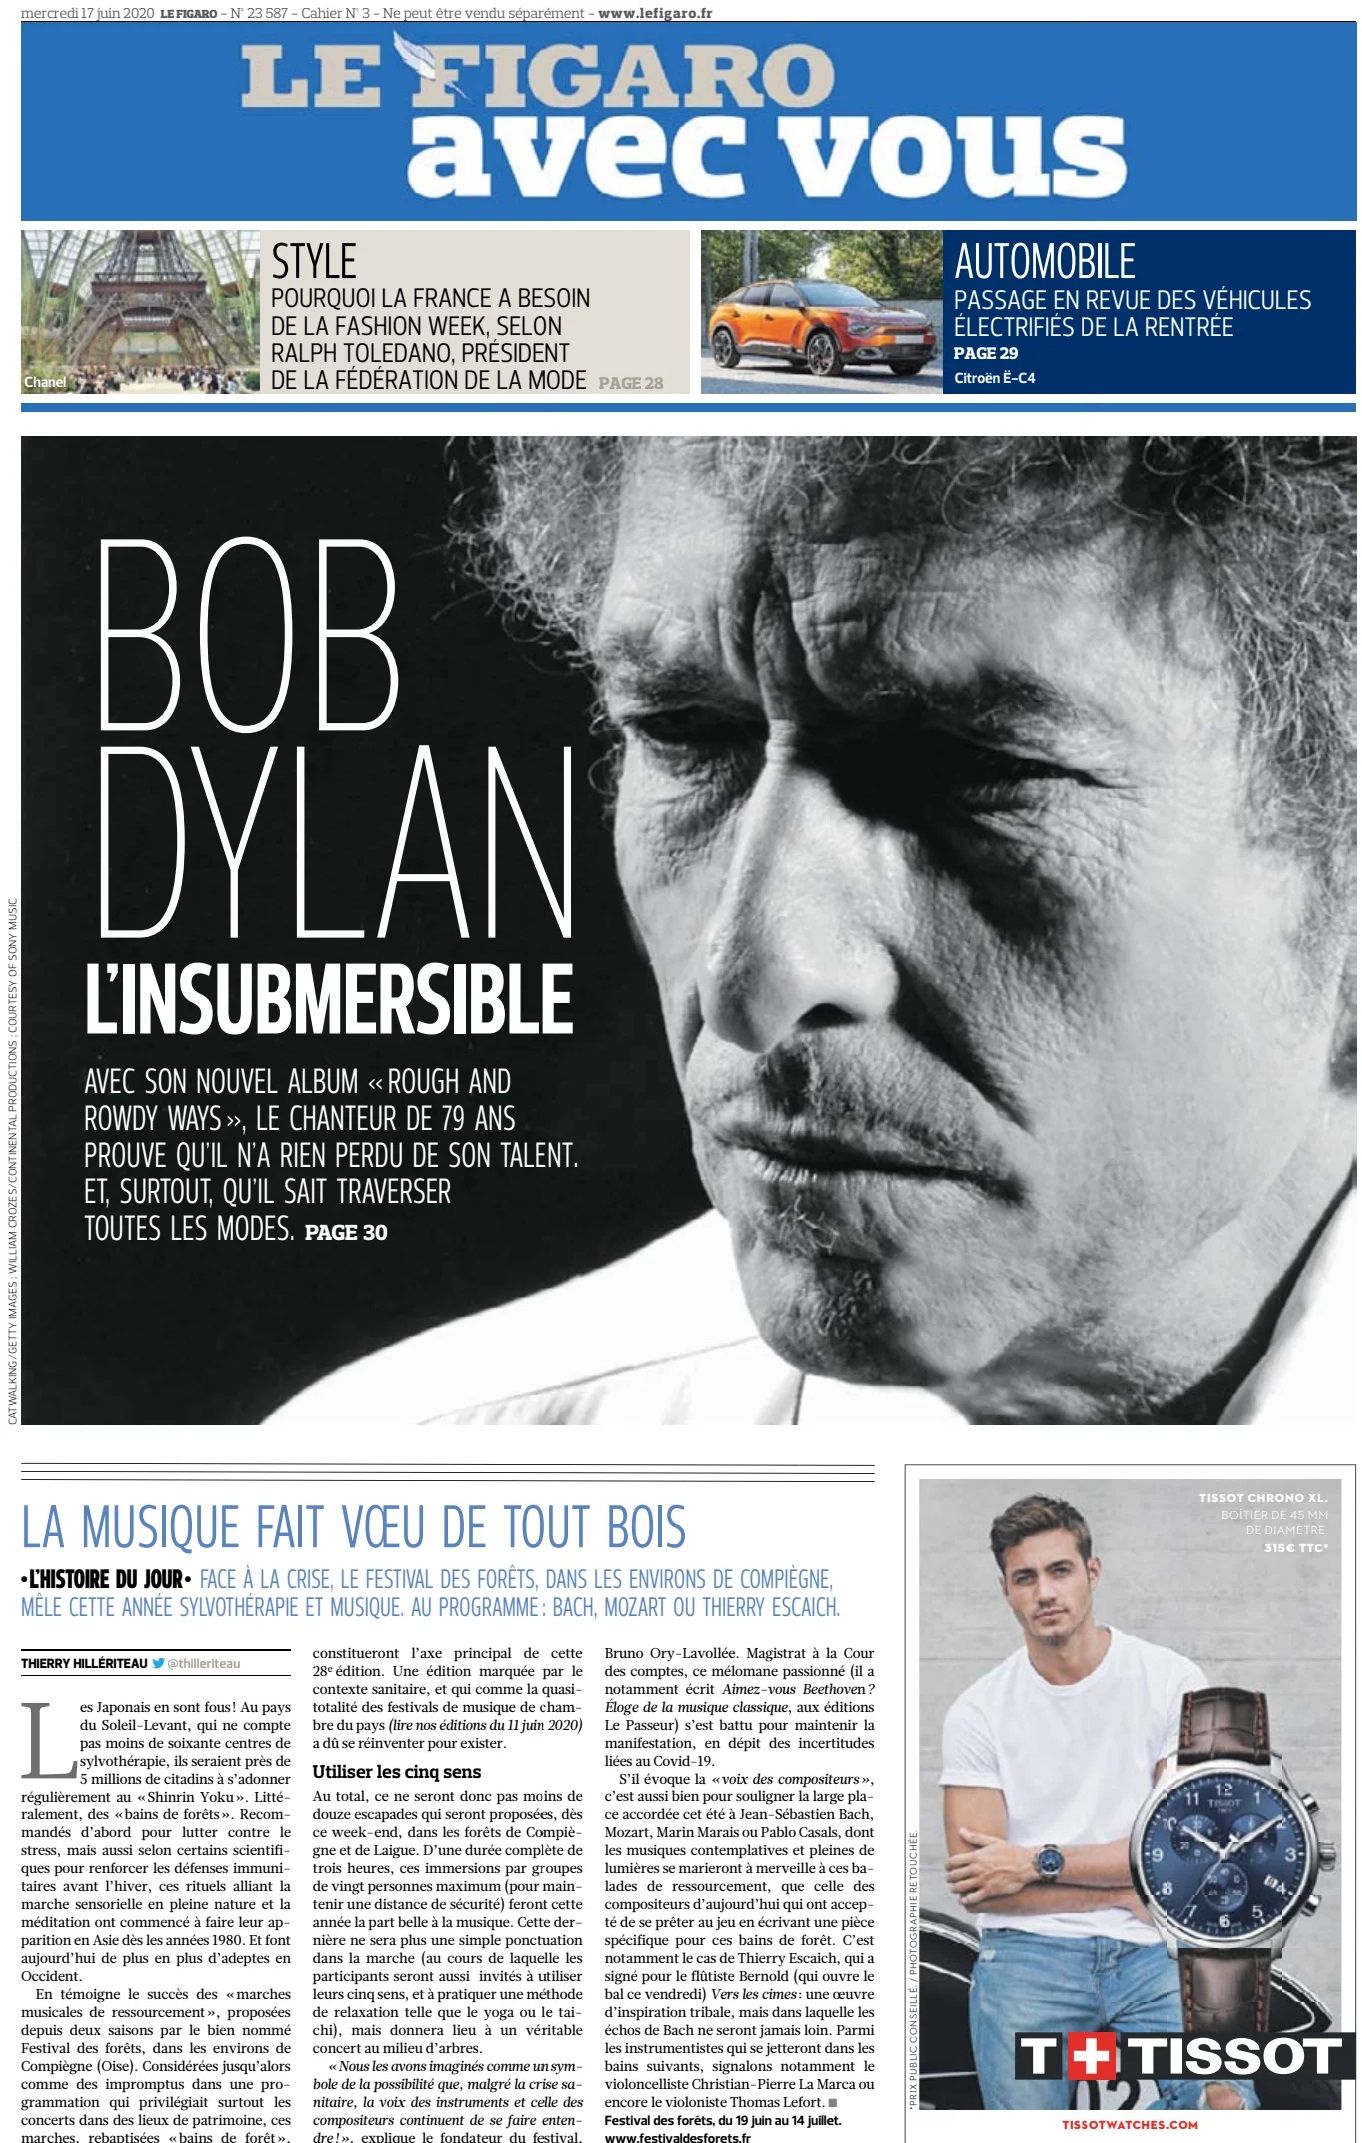 le figaro avec vous 2020 magazine Bob Dylan cover story